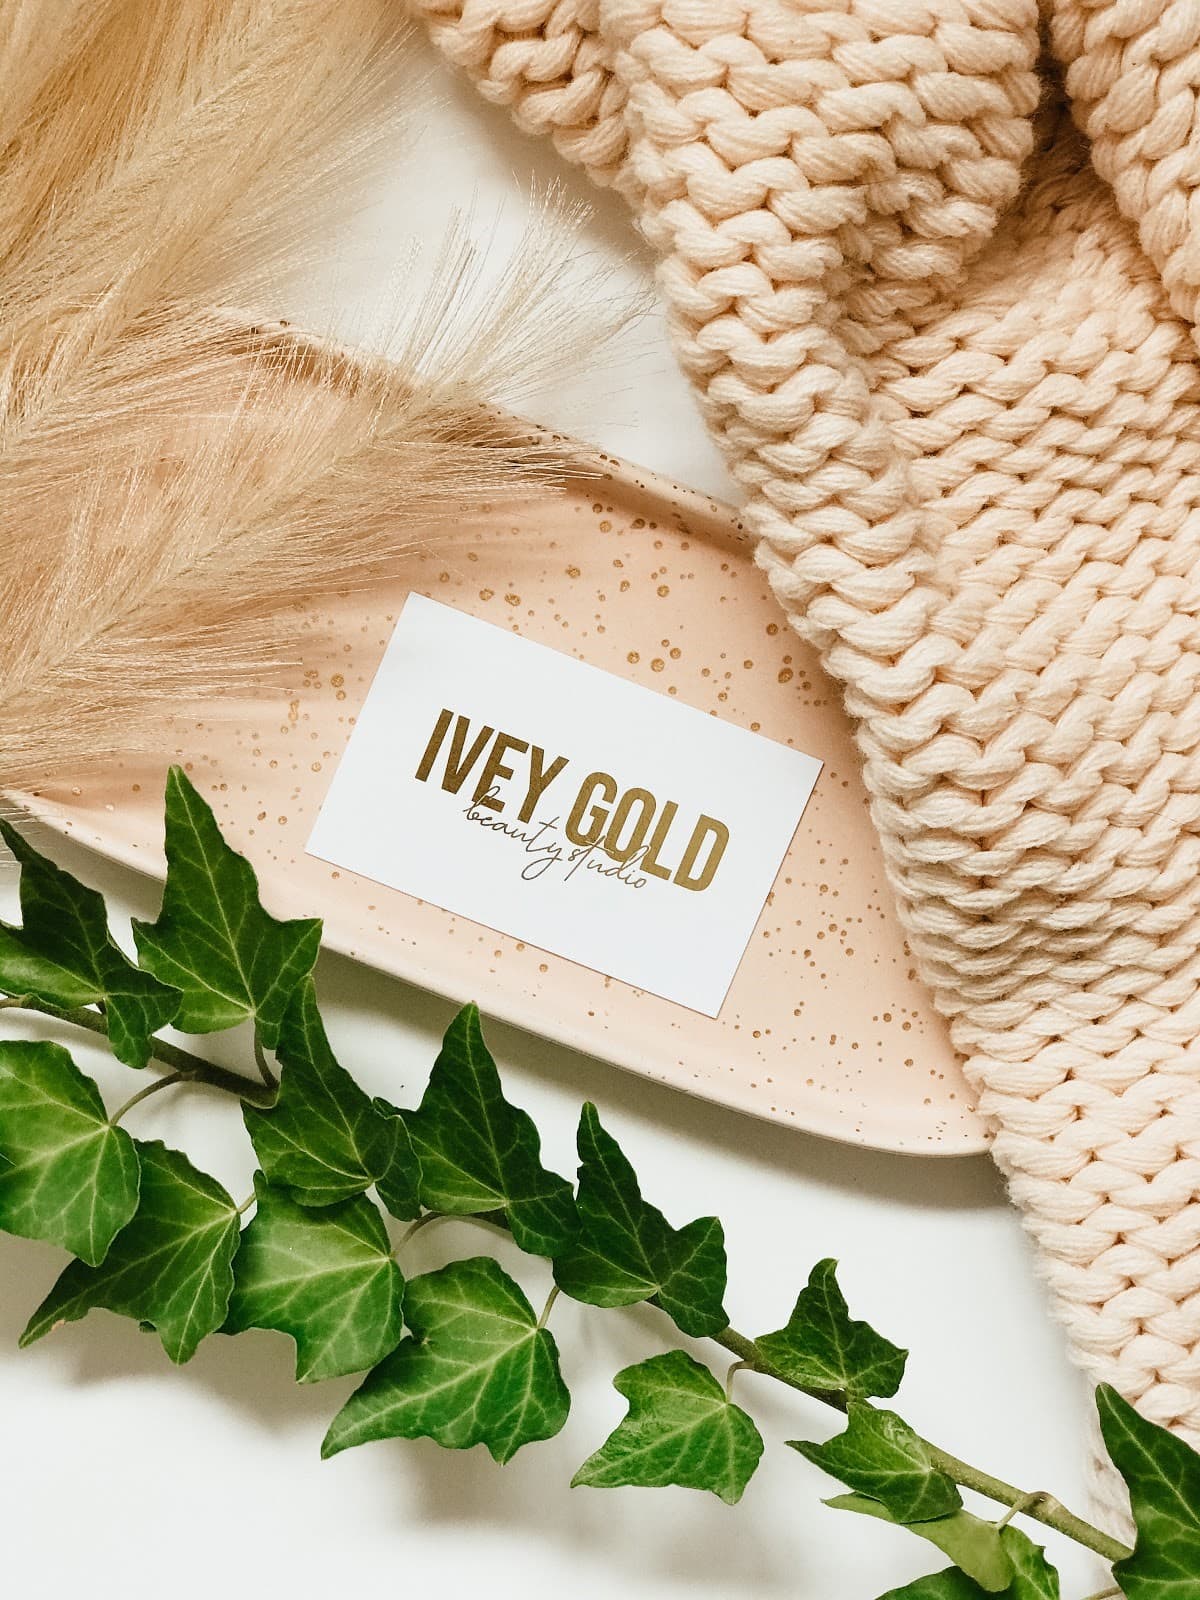 Ivey Gold Beauty Studio